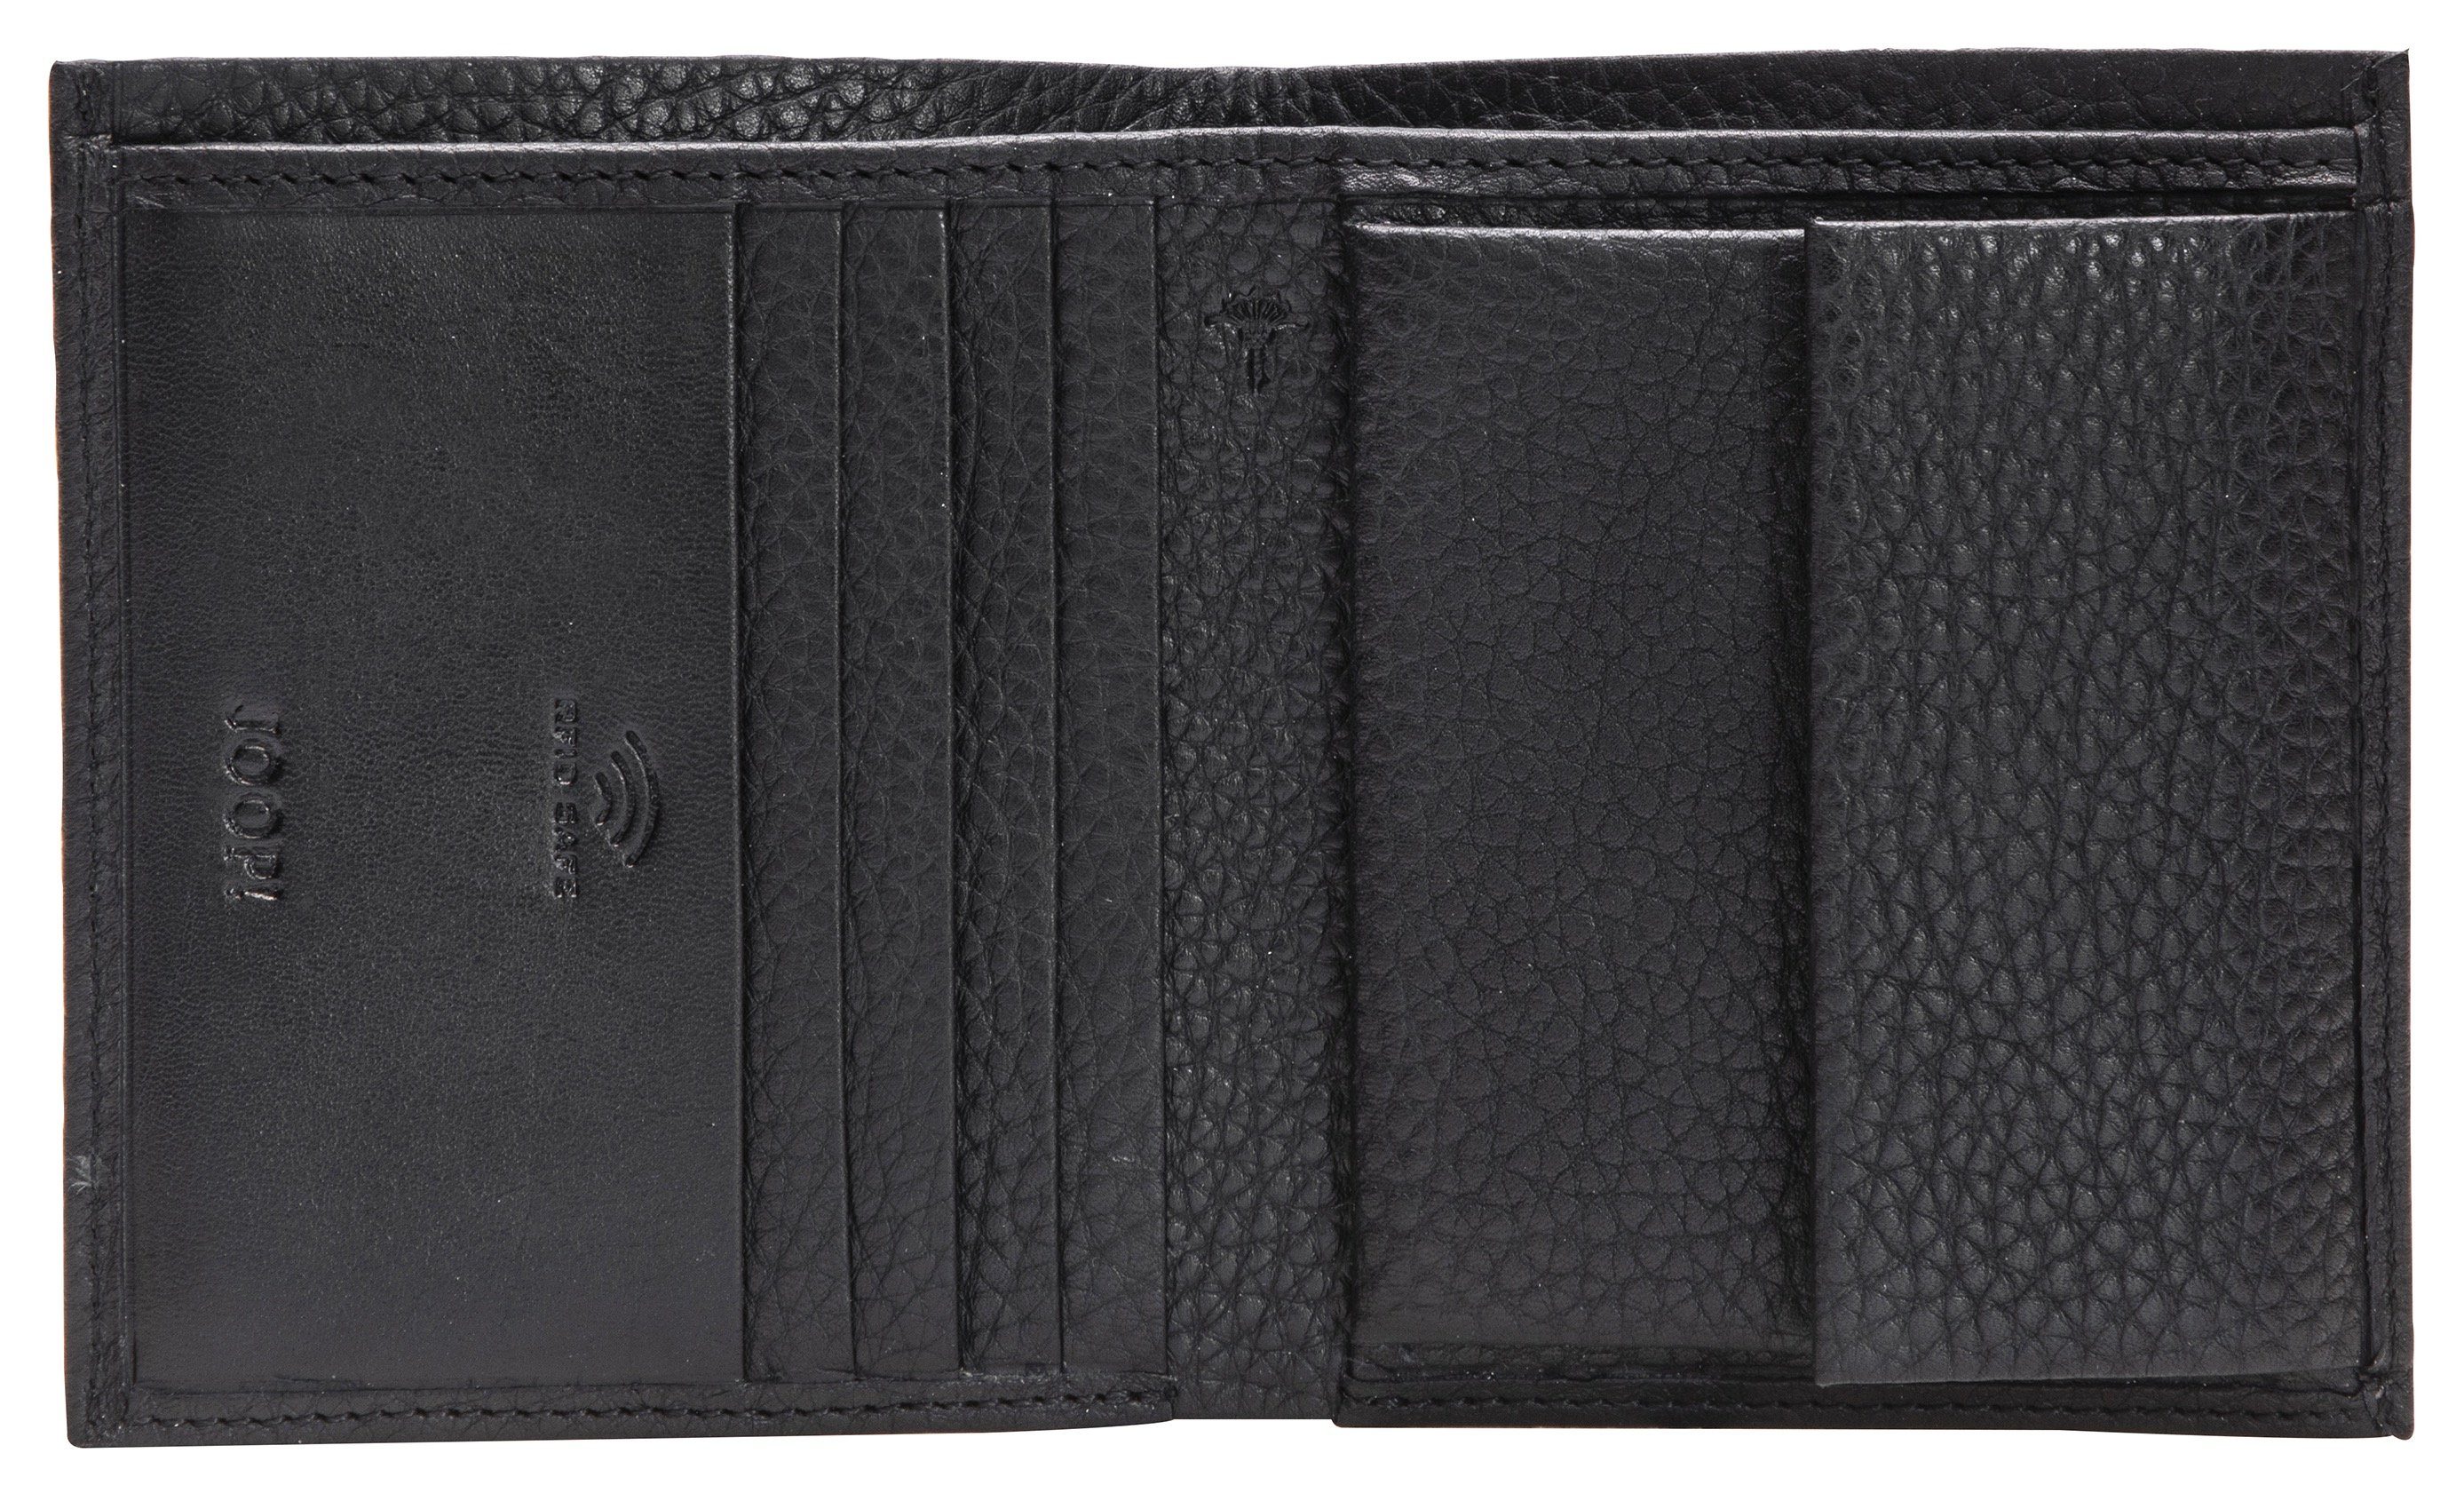 Joop! Geldbörse cardona Beschlägen Metall Black mit anthrazitfarbenem daphnis v6, aus billfold